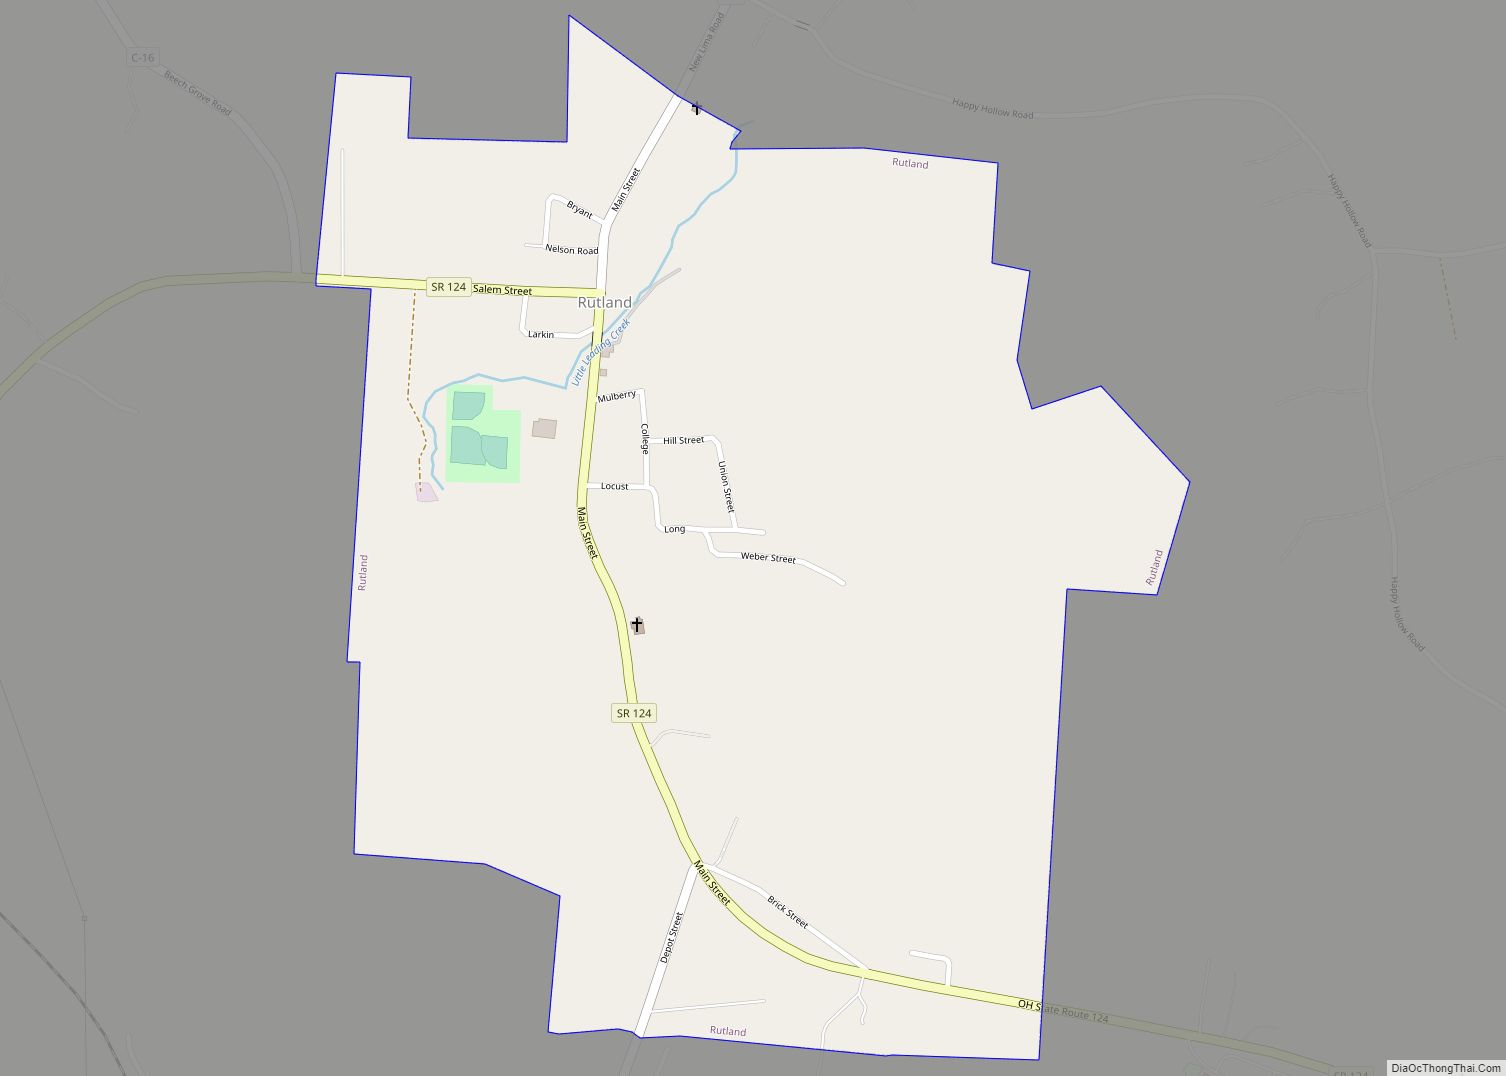 Map of Rutland village, Ohio